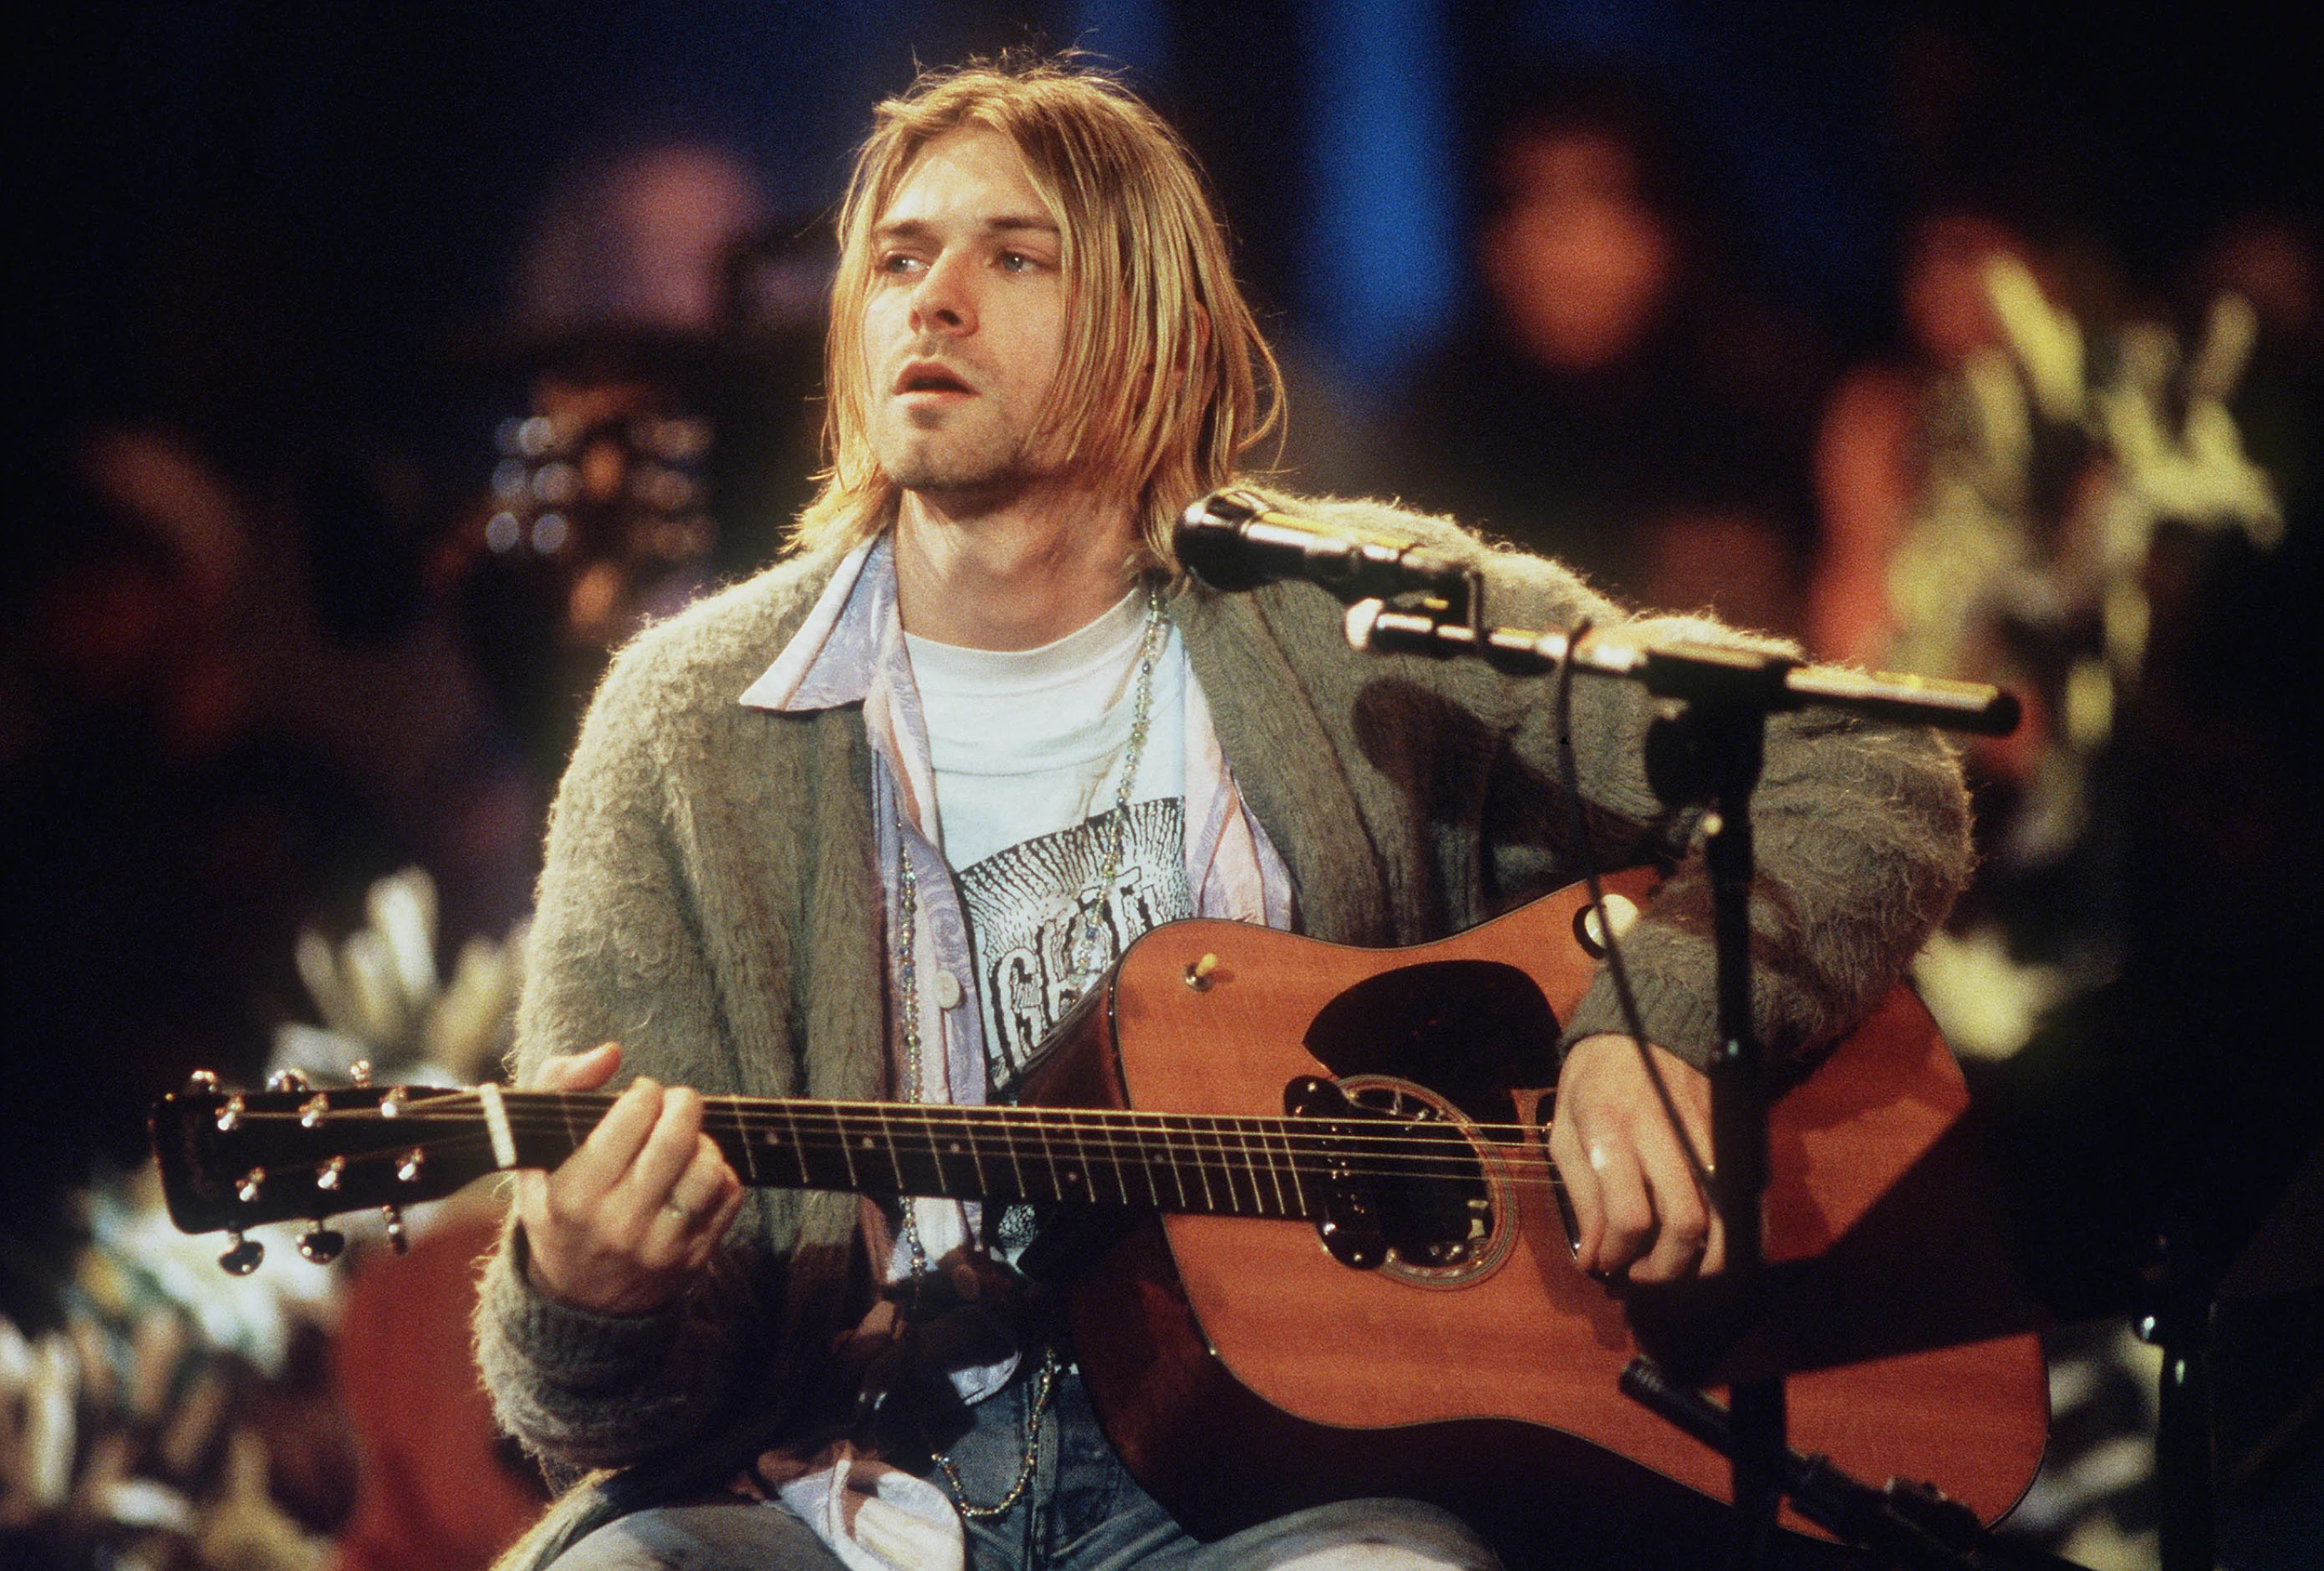 Krist Novoselic Jokes About Trying To Contact Kurt Cobain